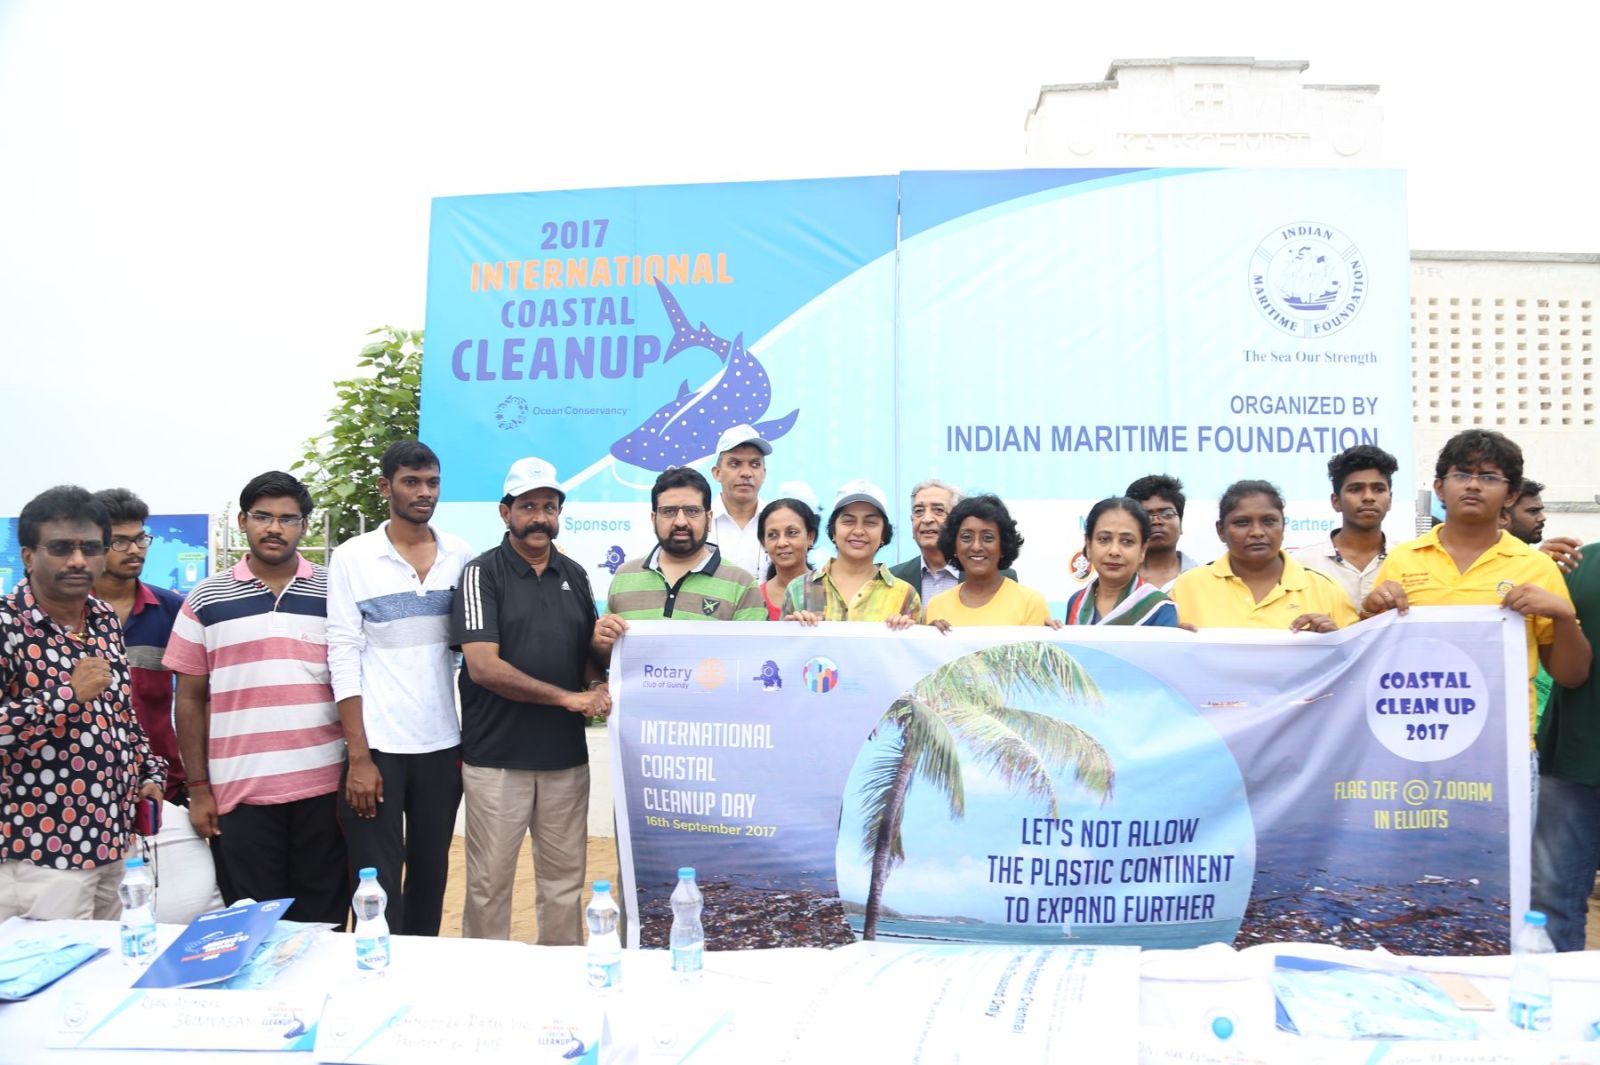 2017 International coastal cleanup Event Photos (24)